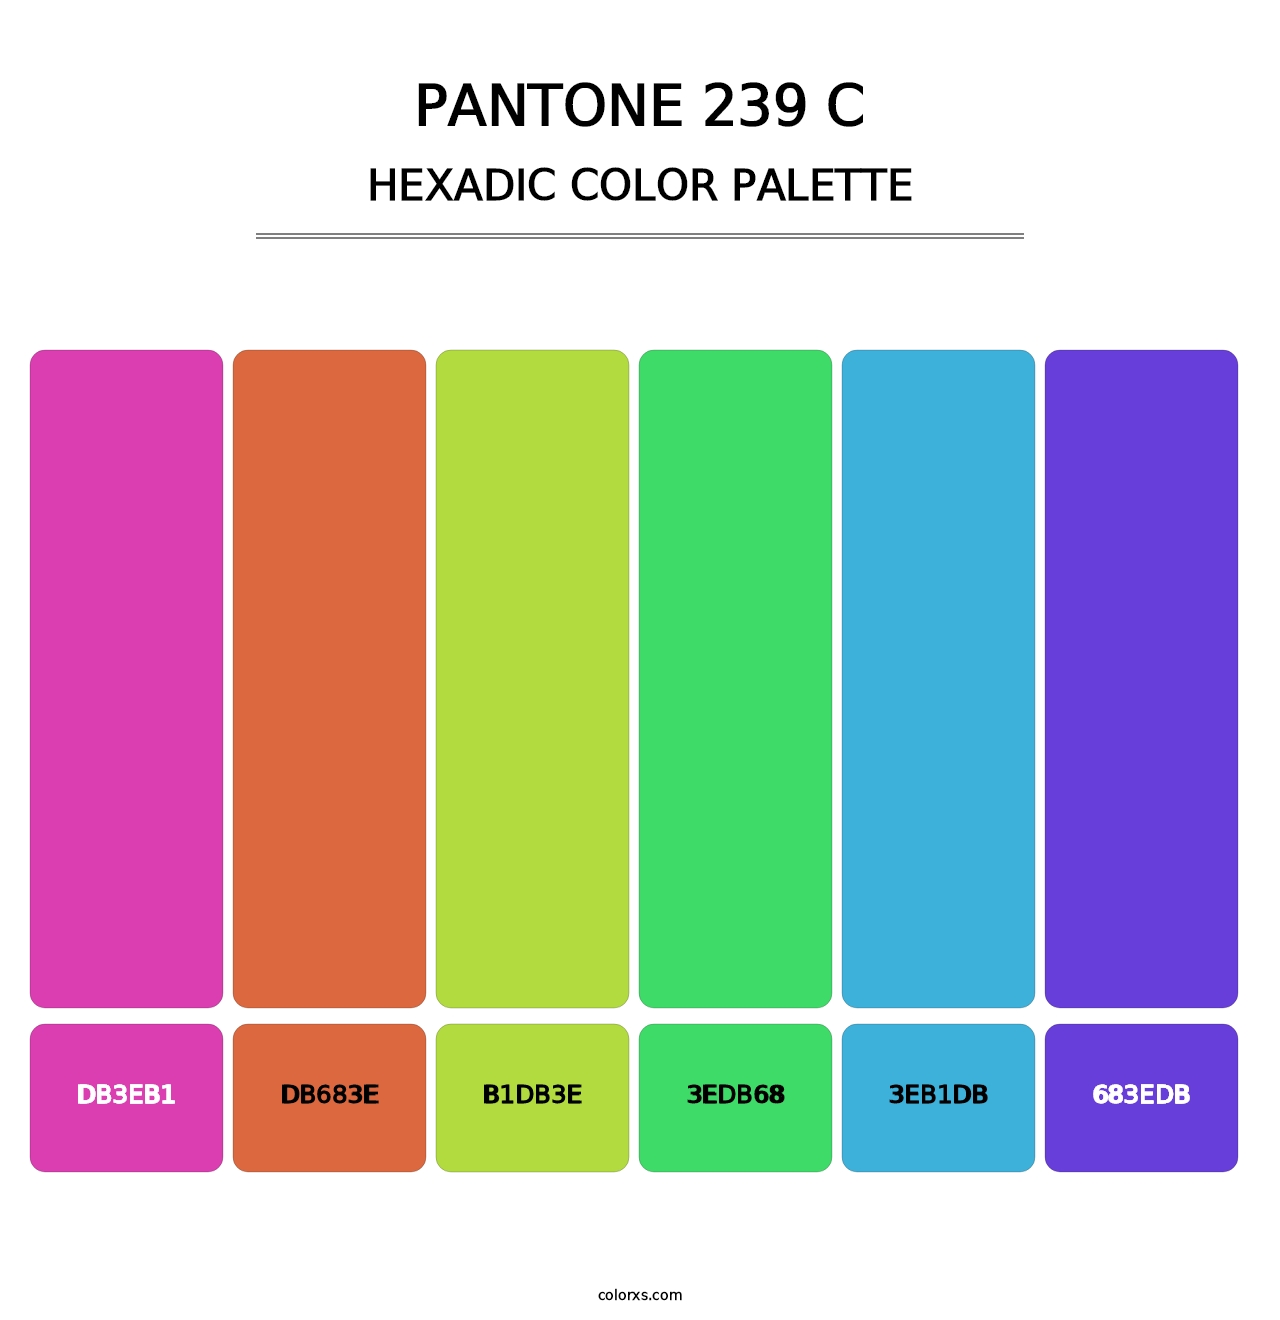 PANTONE 239 C - Hexadic Color Palette